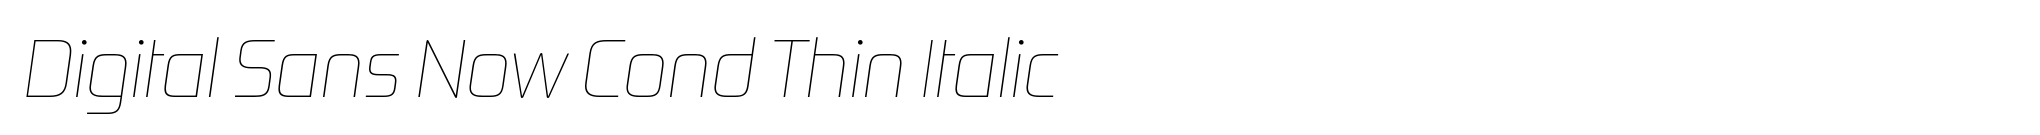 Digital Sans Now Cond Thin Italic image